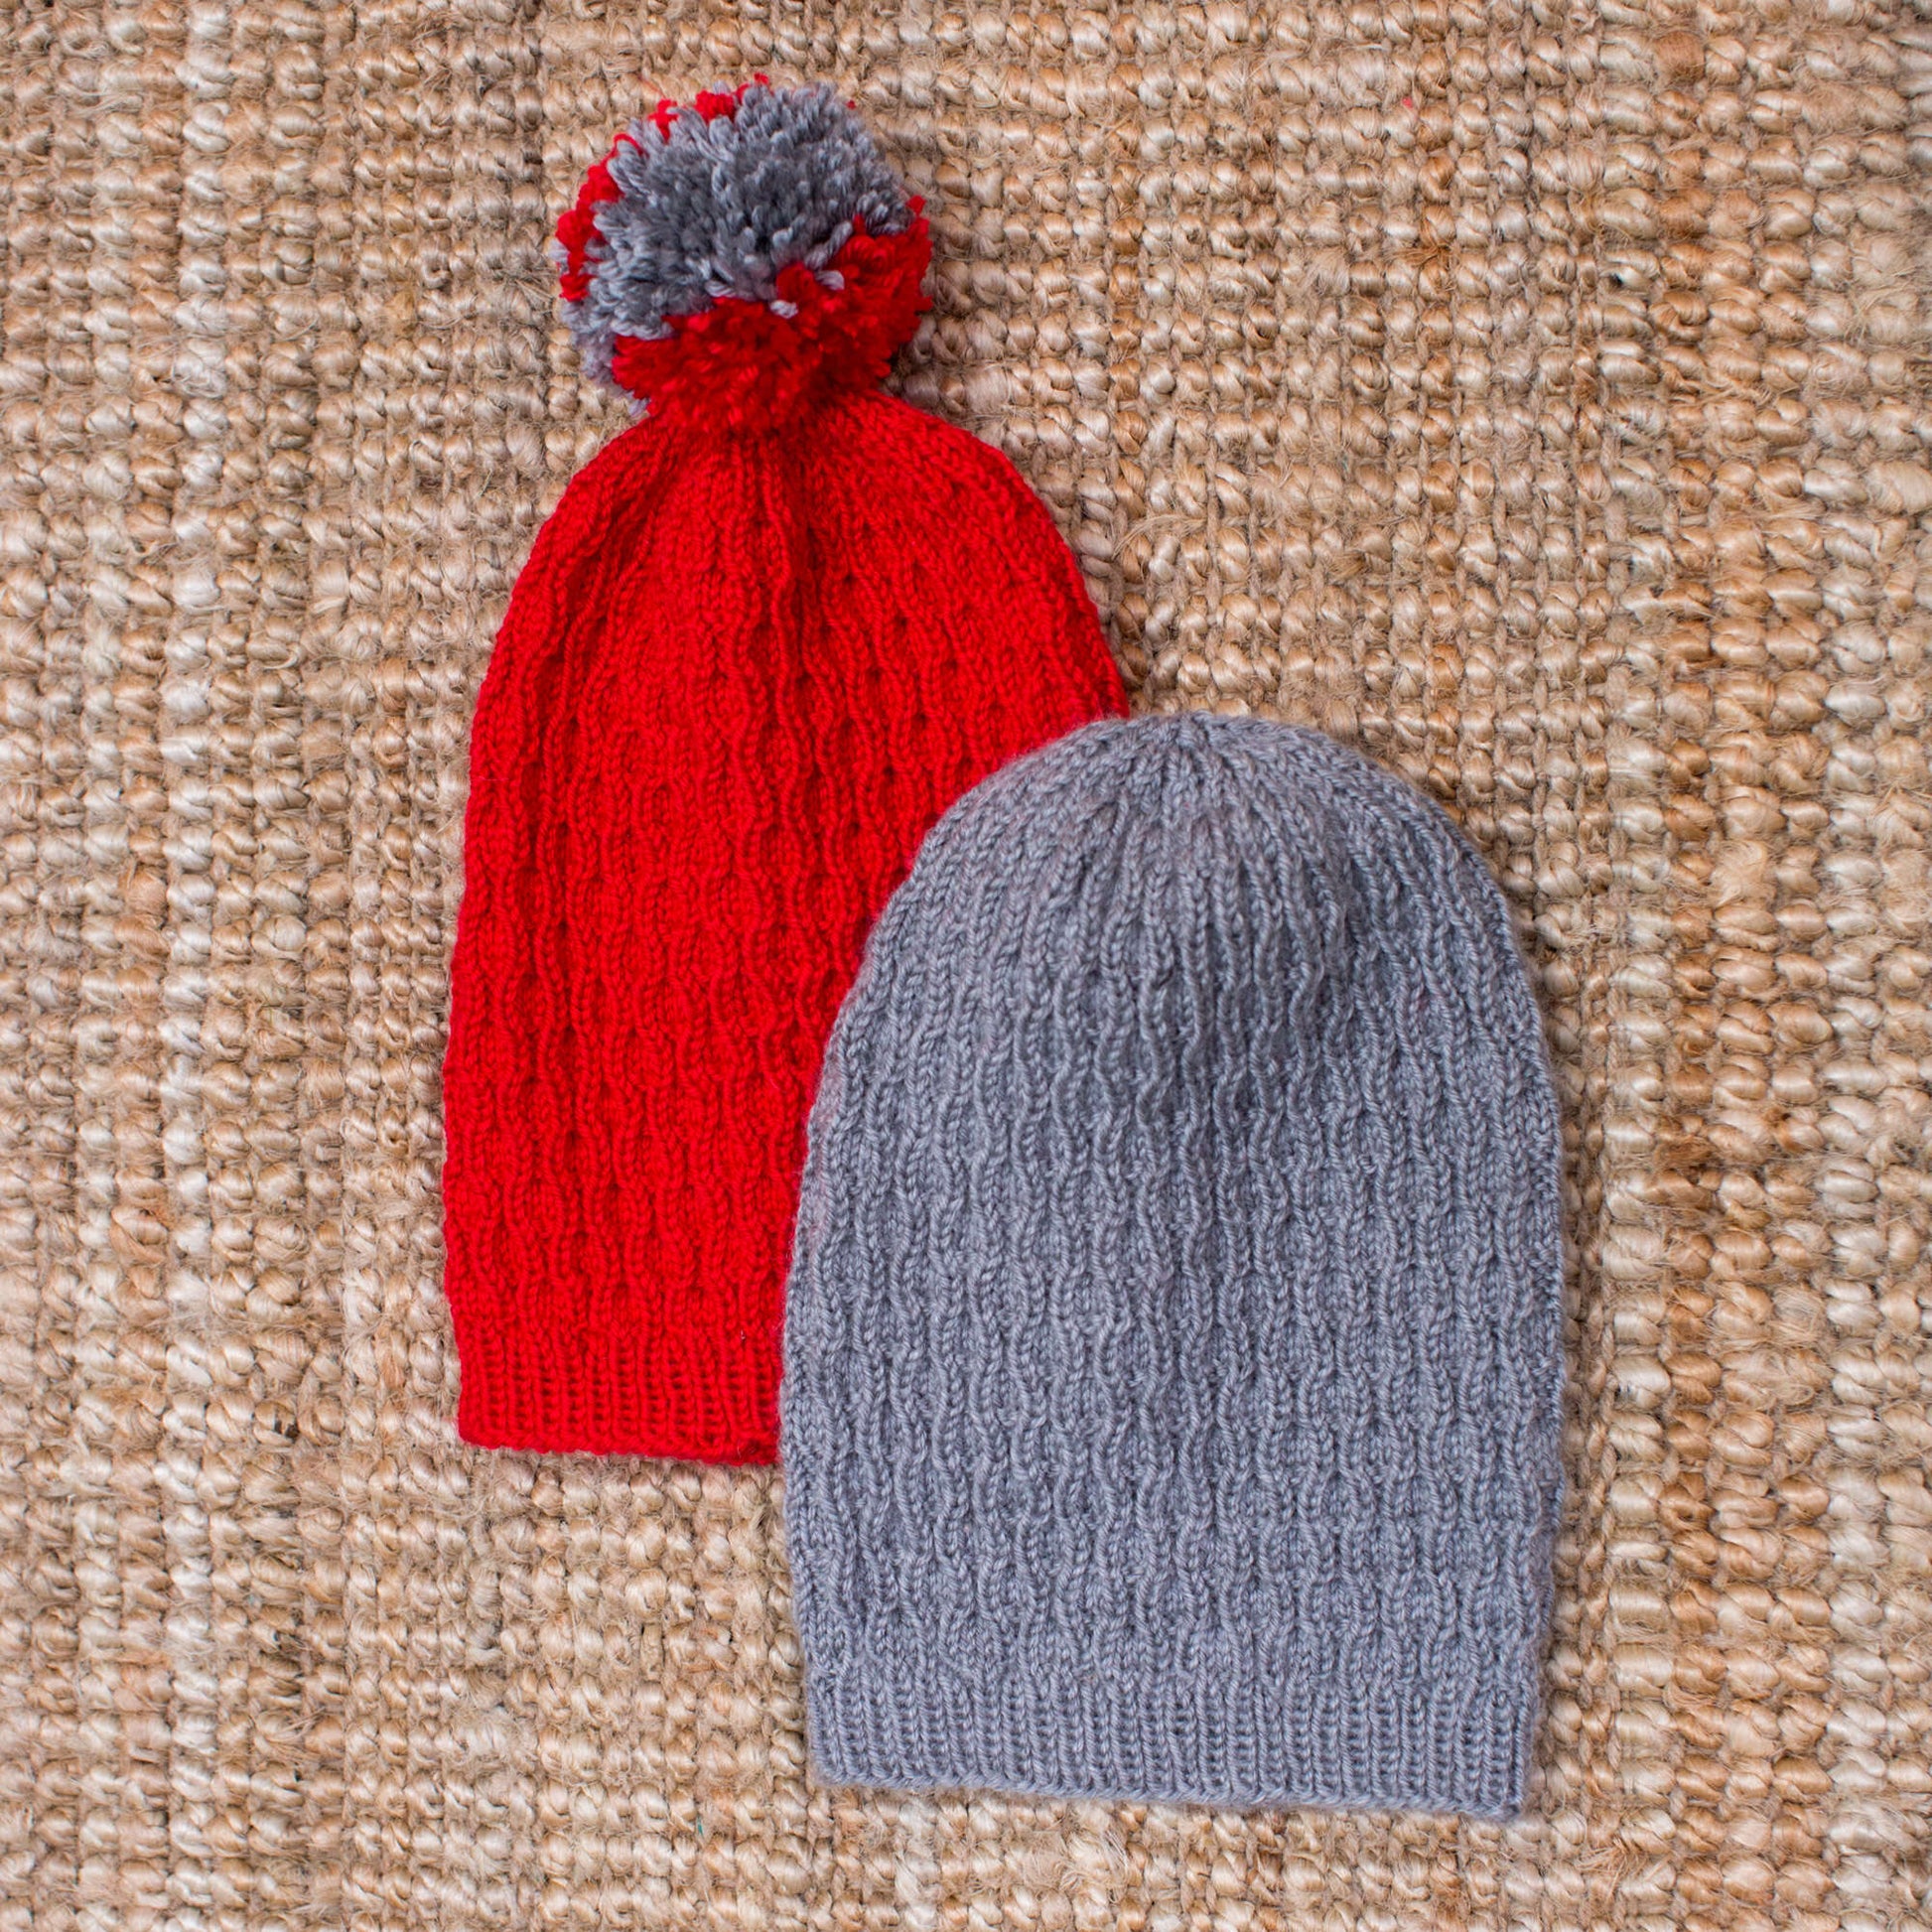 Free Red Heart Knit Unisex Slouchy Hats Pattern